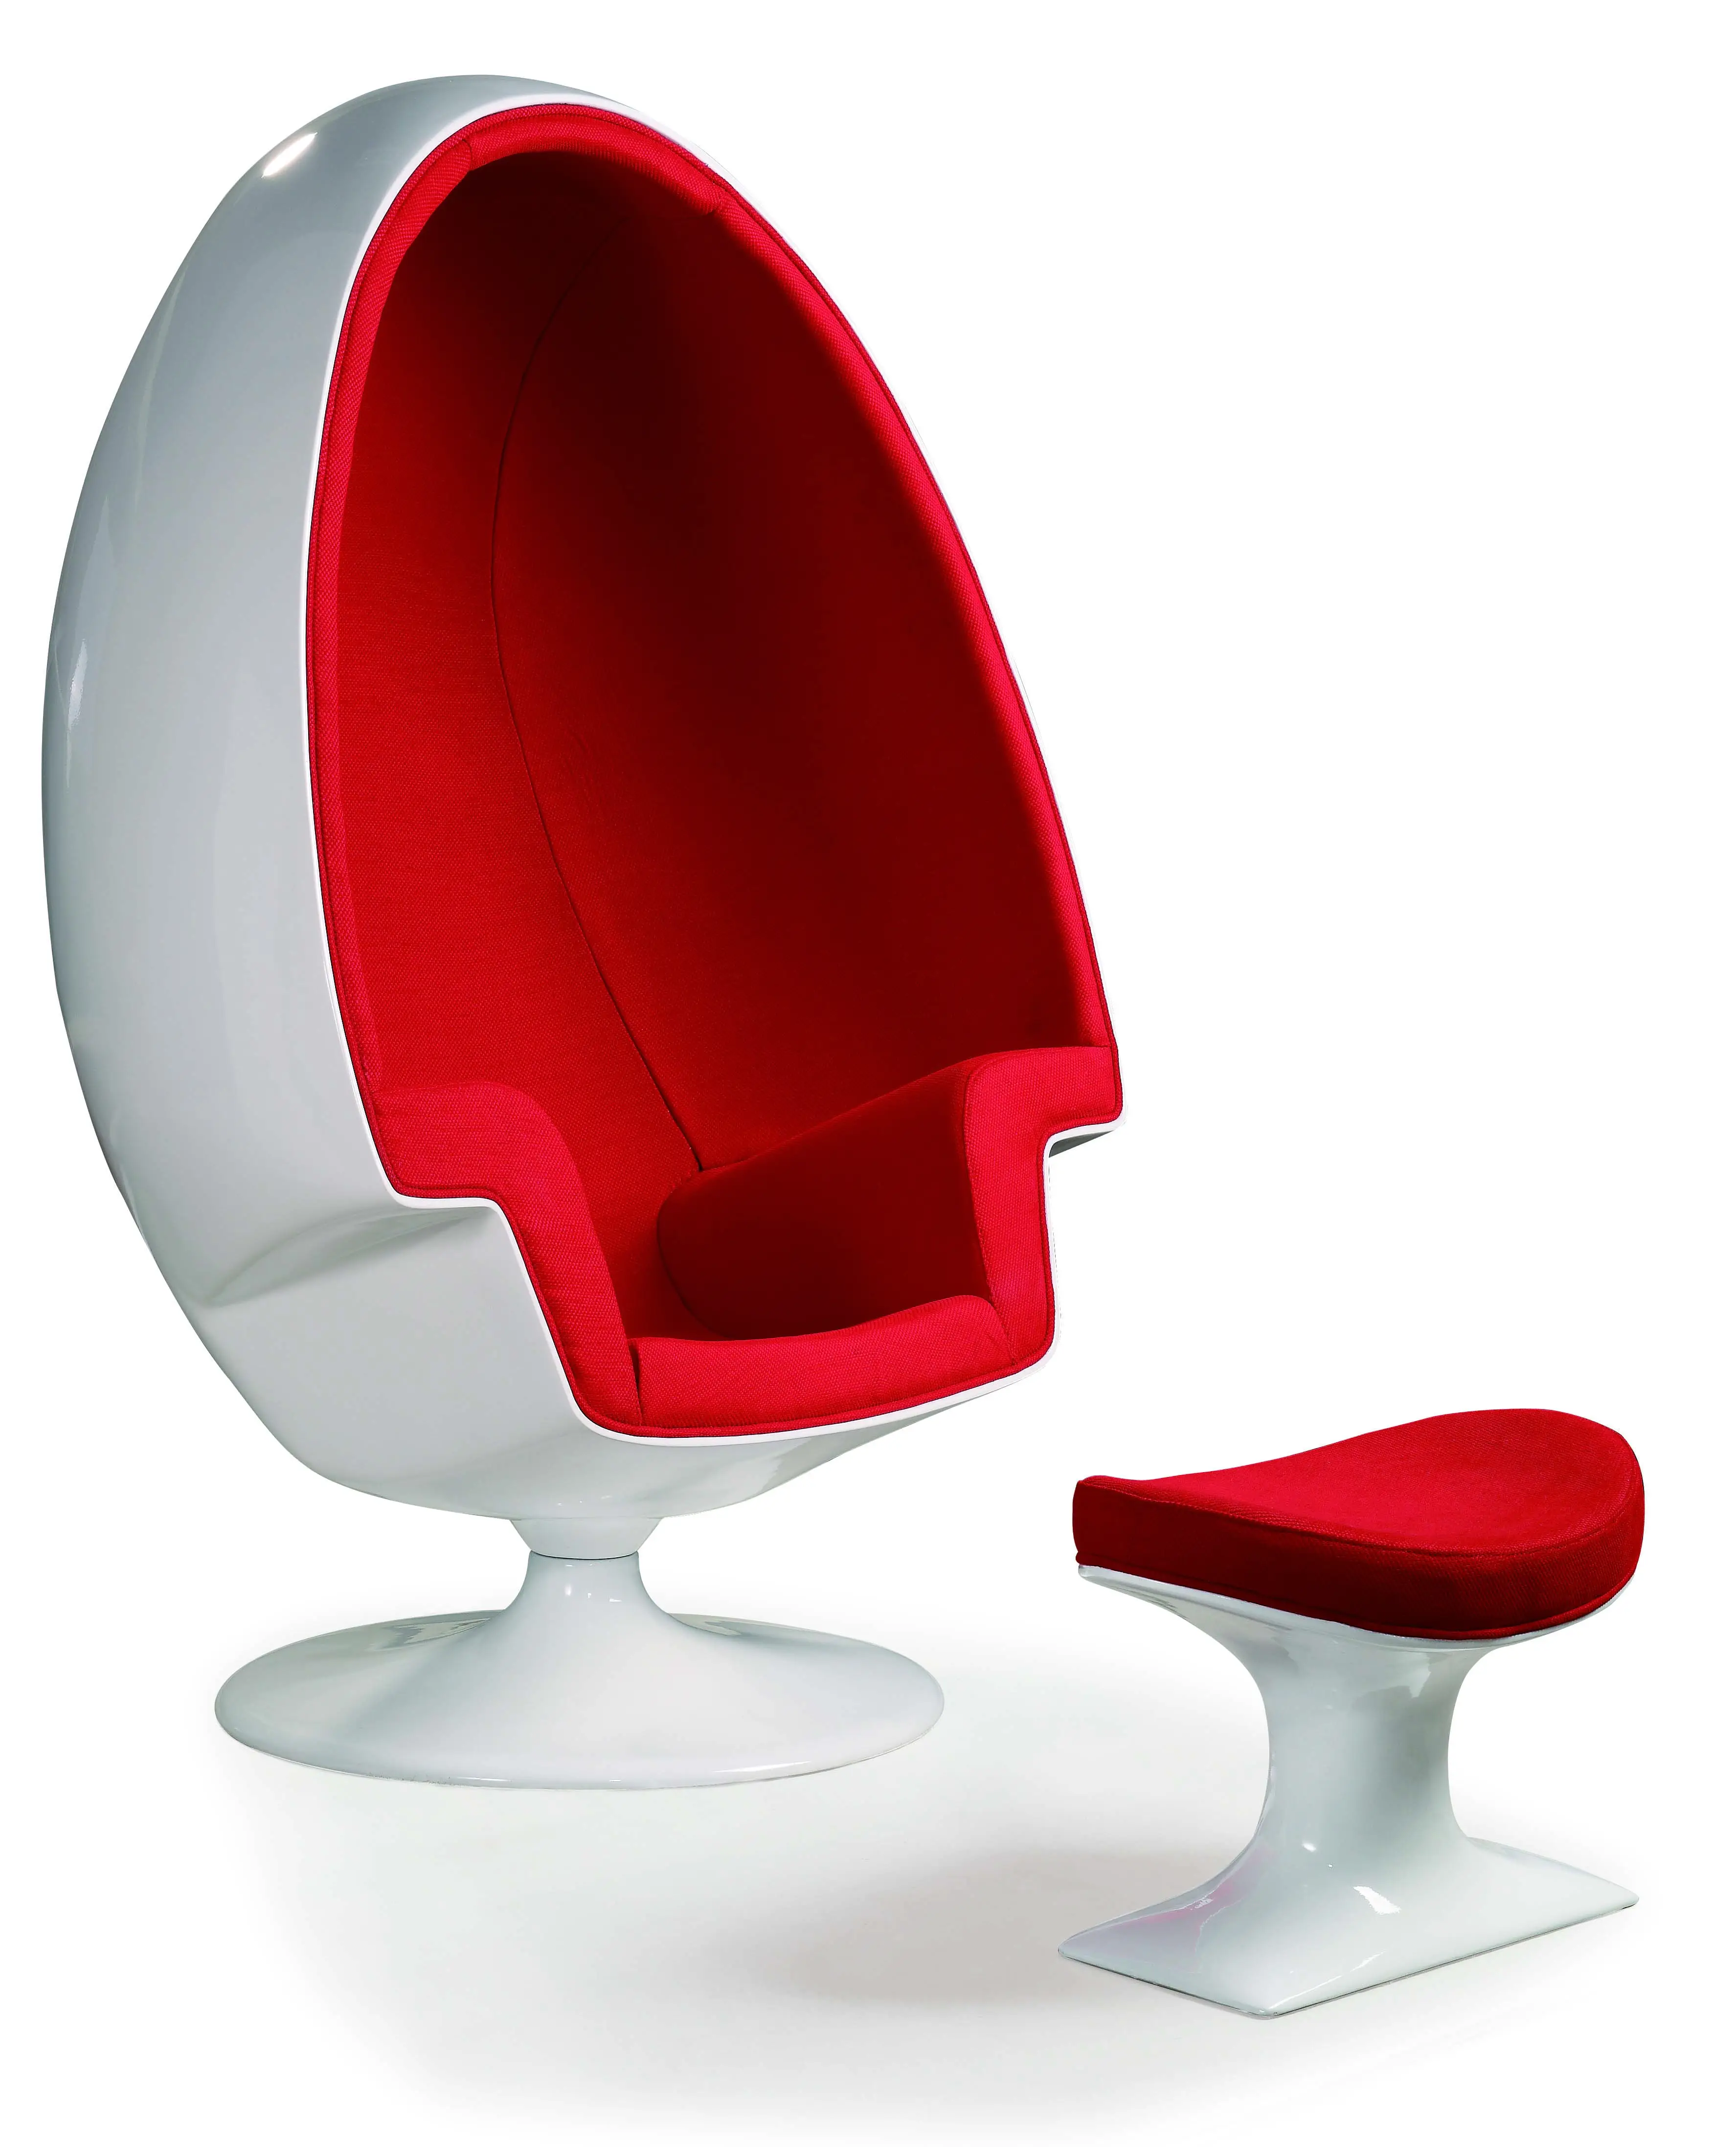 Buy Swivel Fiberglass Adult Size Relaxed Oval Egg Shaped Lee West Mod Aviator Stereo Alpha Pod Speaker Chair